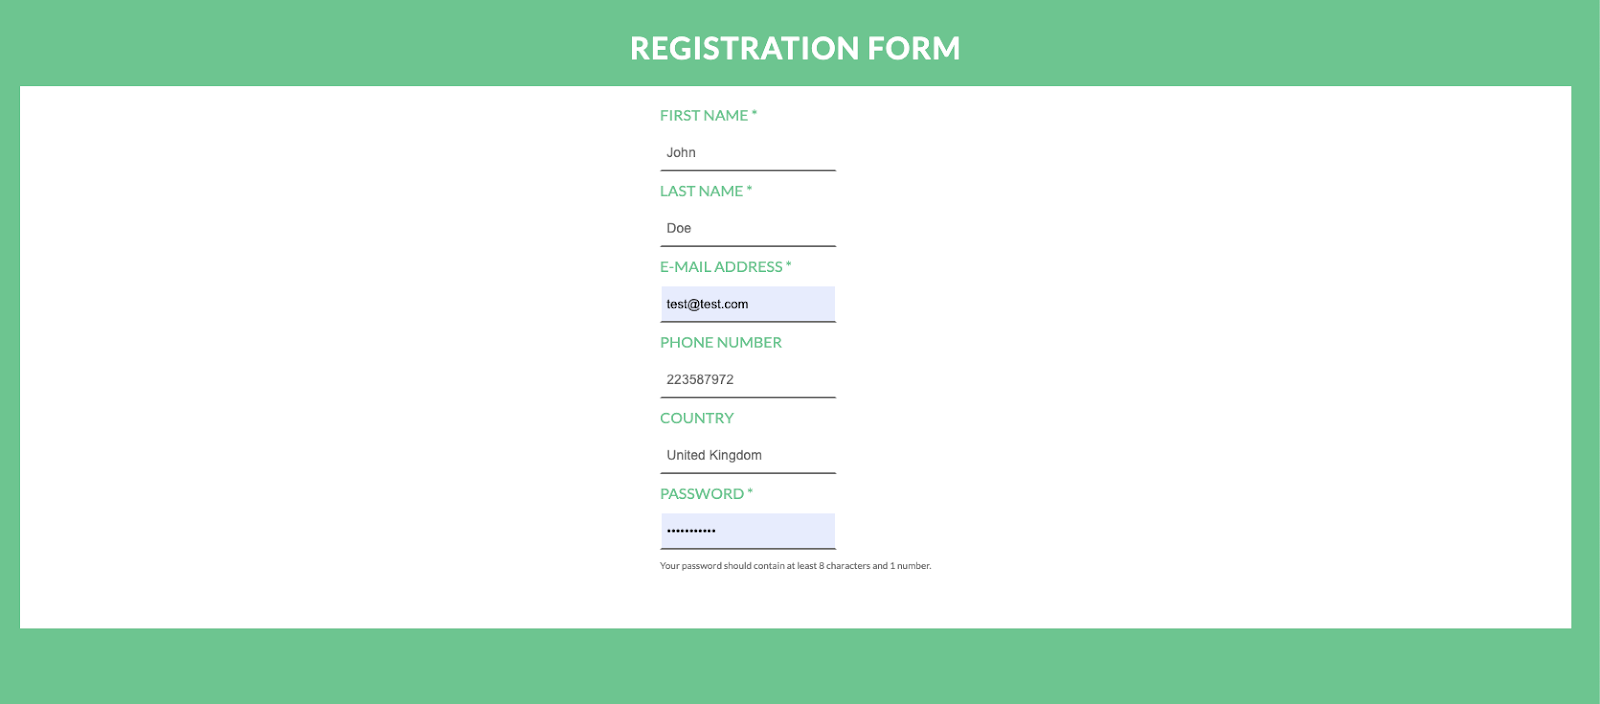 aliens-registration-form-with-validation